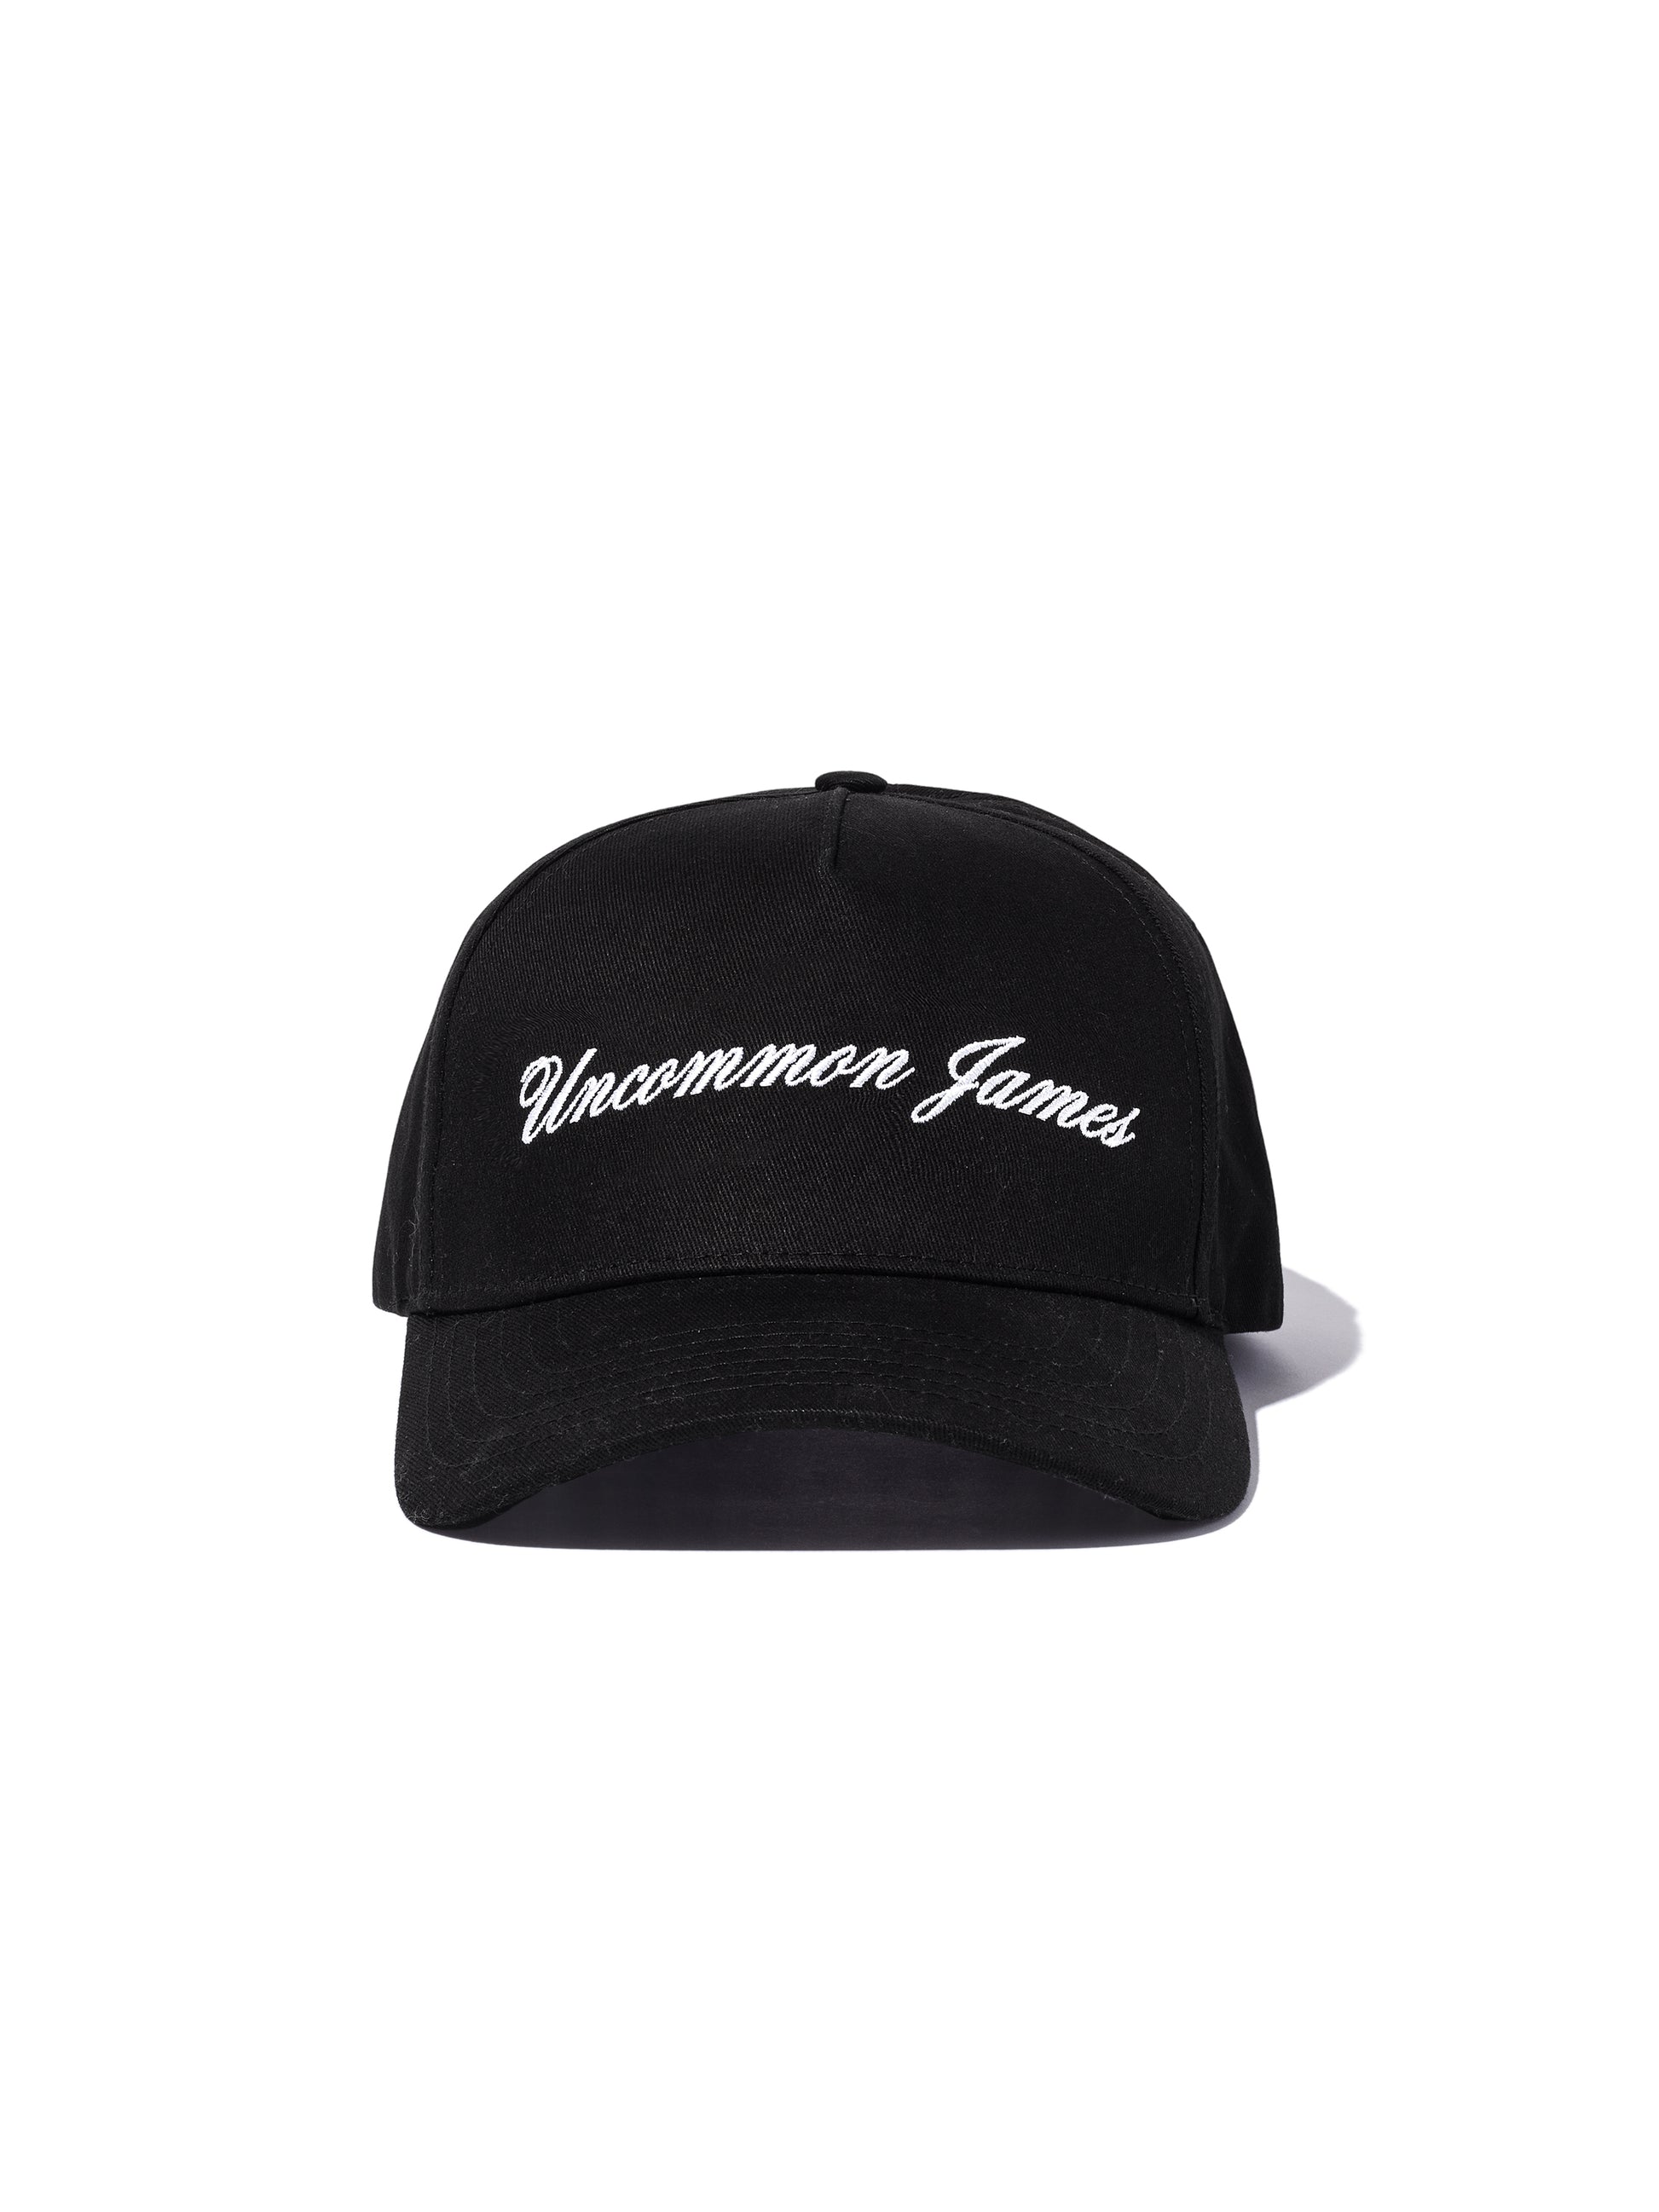 UJ Girl Trucker Hat | Black | Product Image | Uncommon Lifestyle